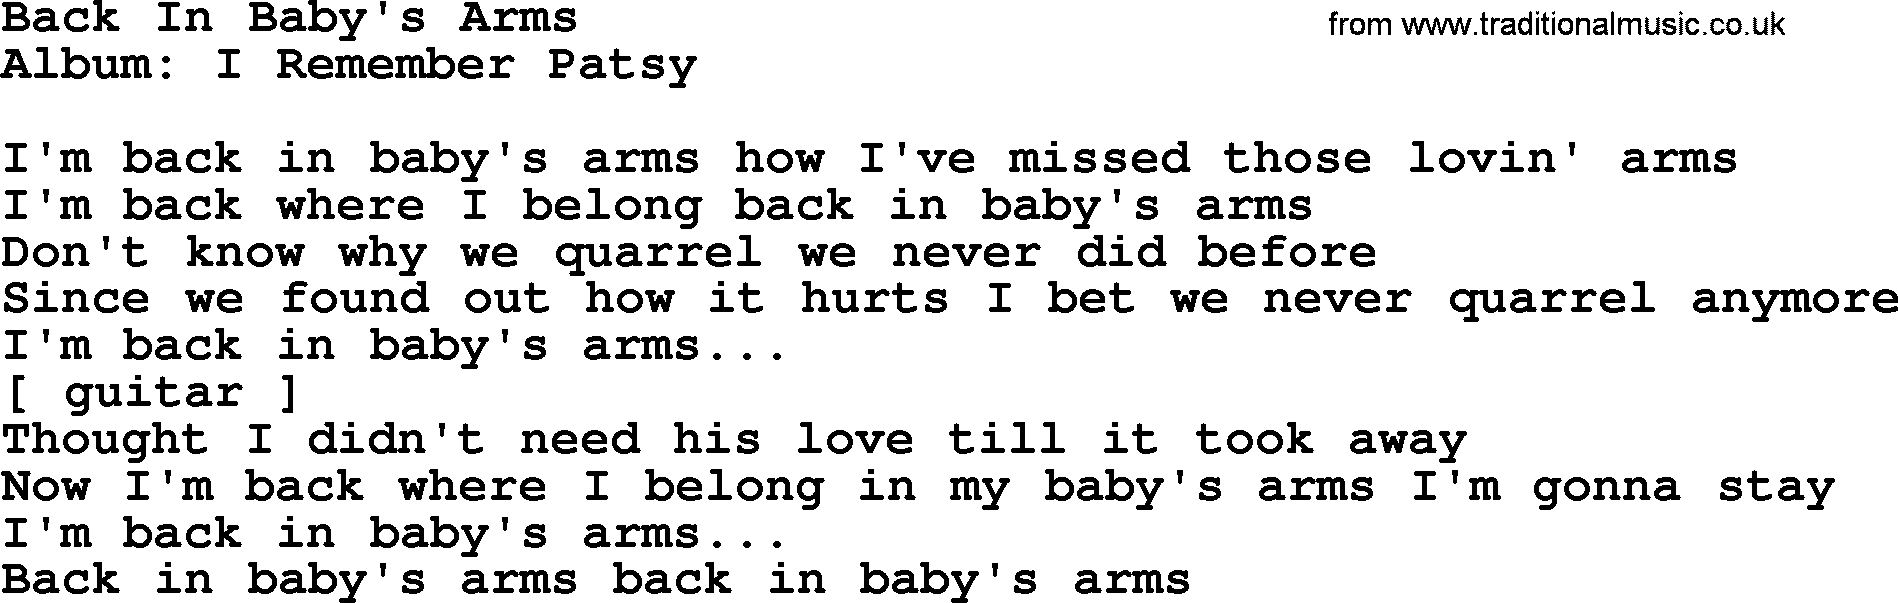 Loretta Lynn song: Back In Baby's Arms lyrics